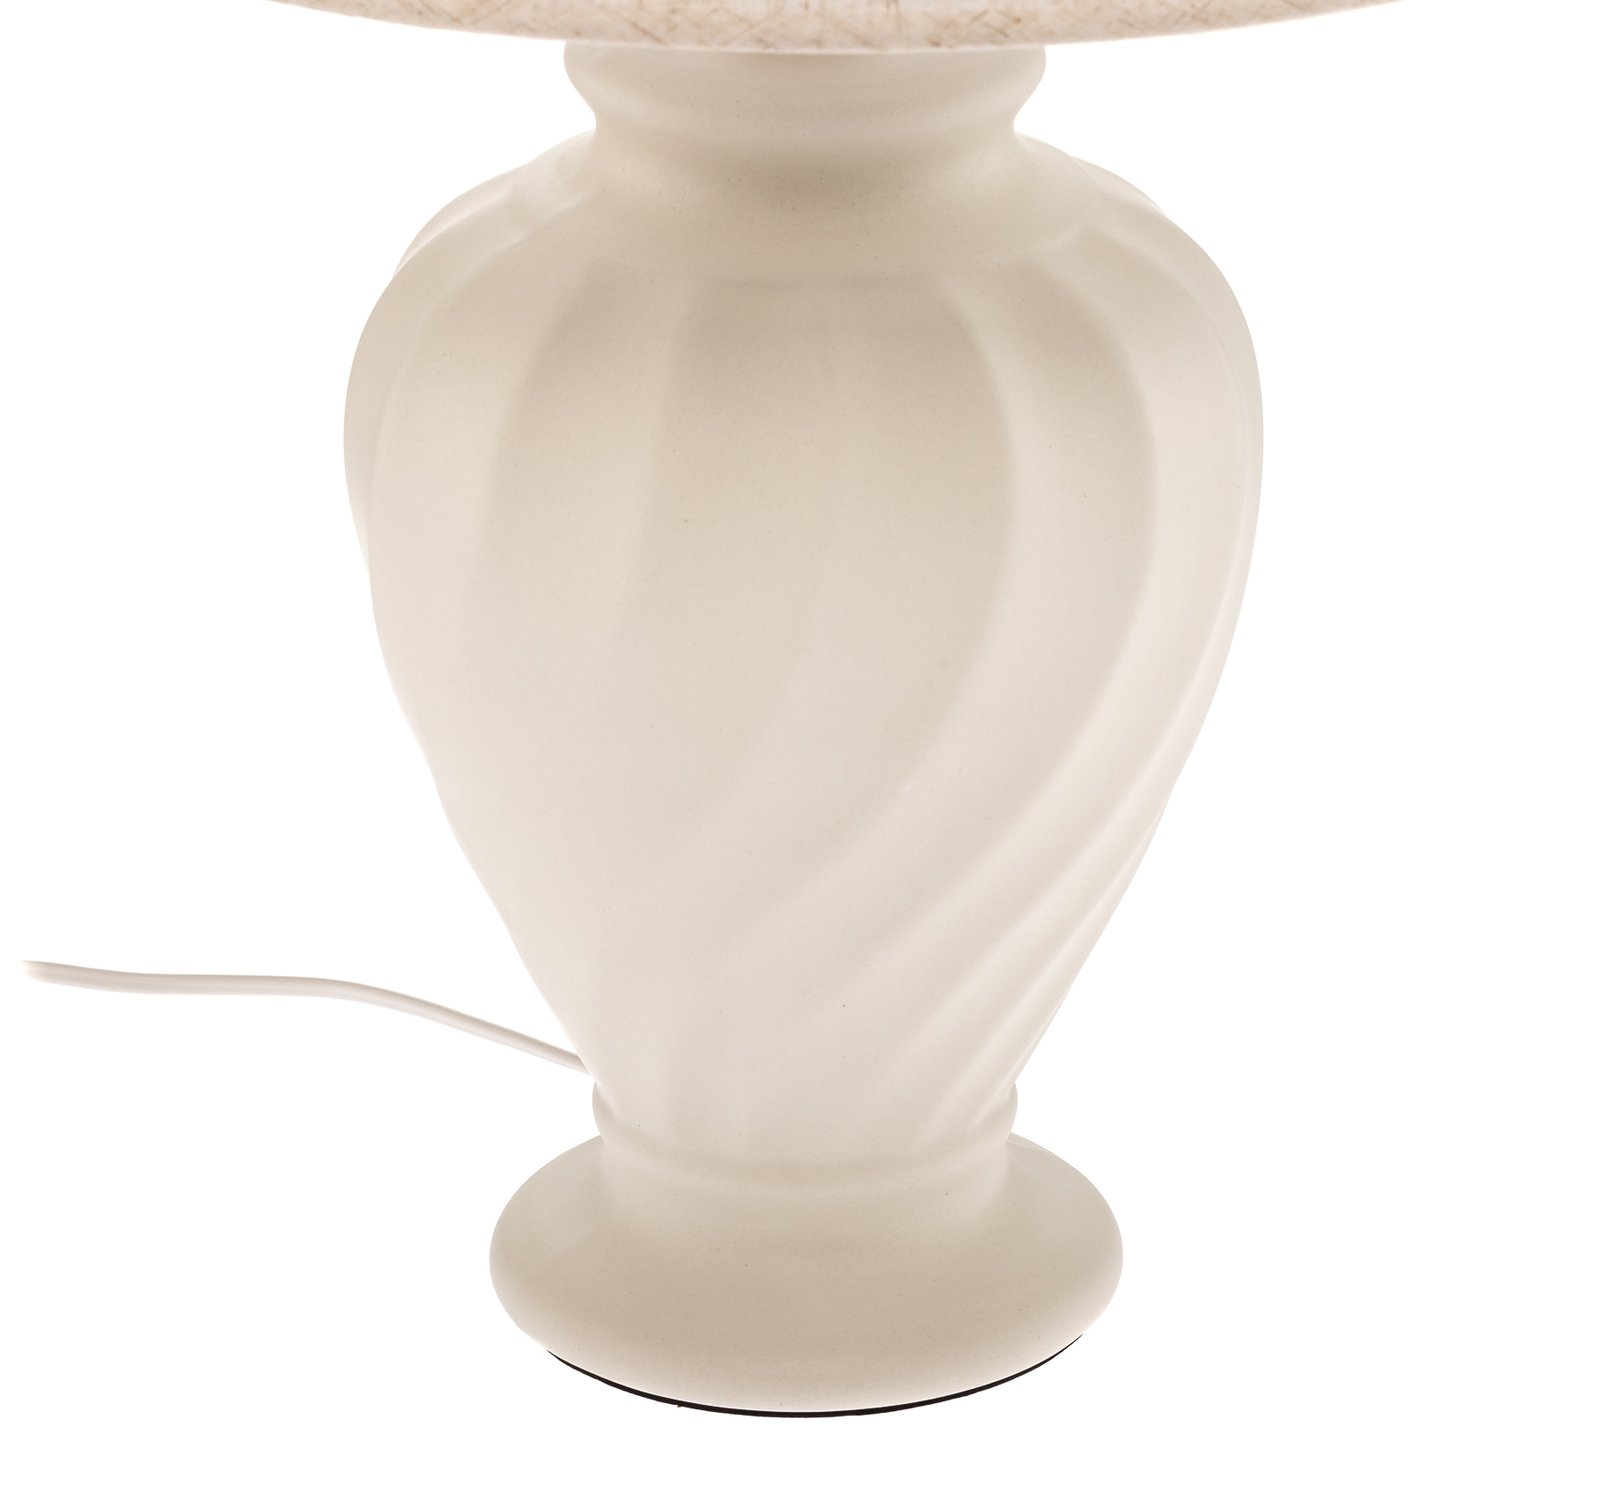 Vortice table lamp made of ceramics, white